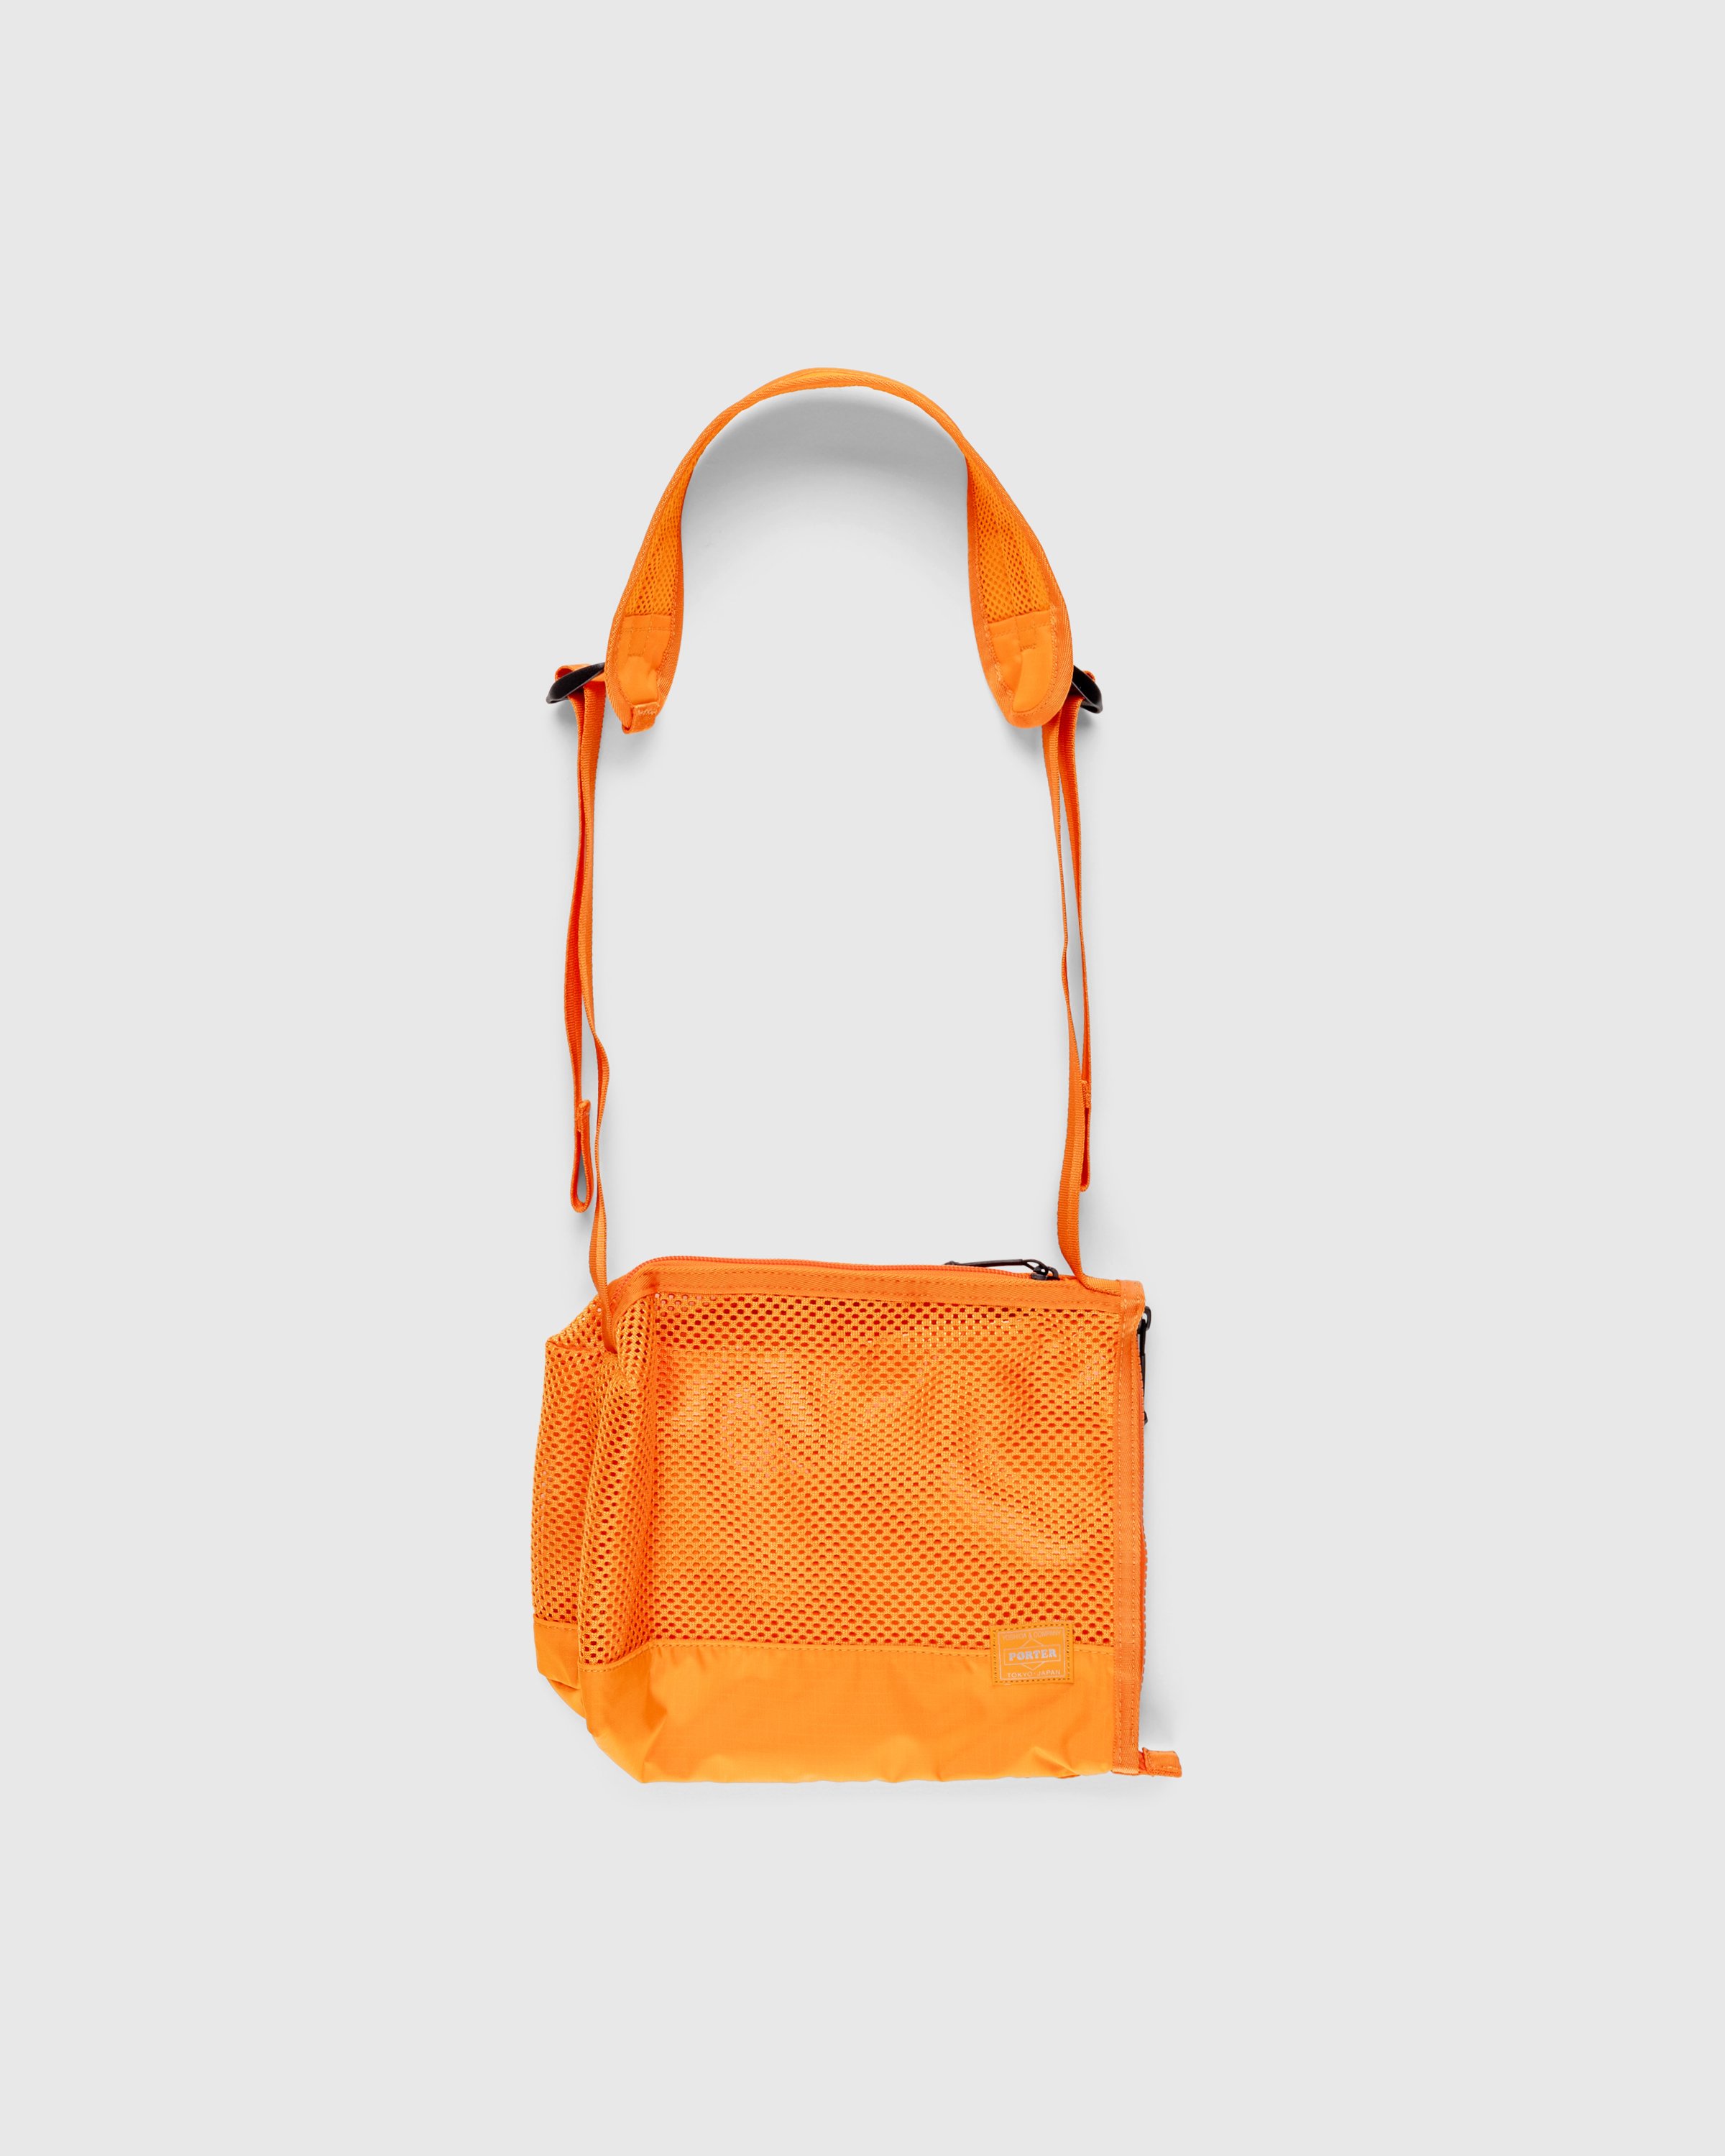 Porter-Yoshida & Co. - Screen Front Side Bag Orange - Accessories - Orange - Image 1